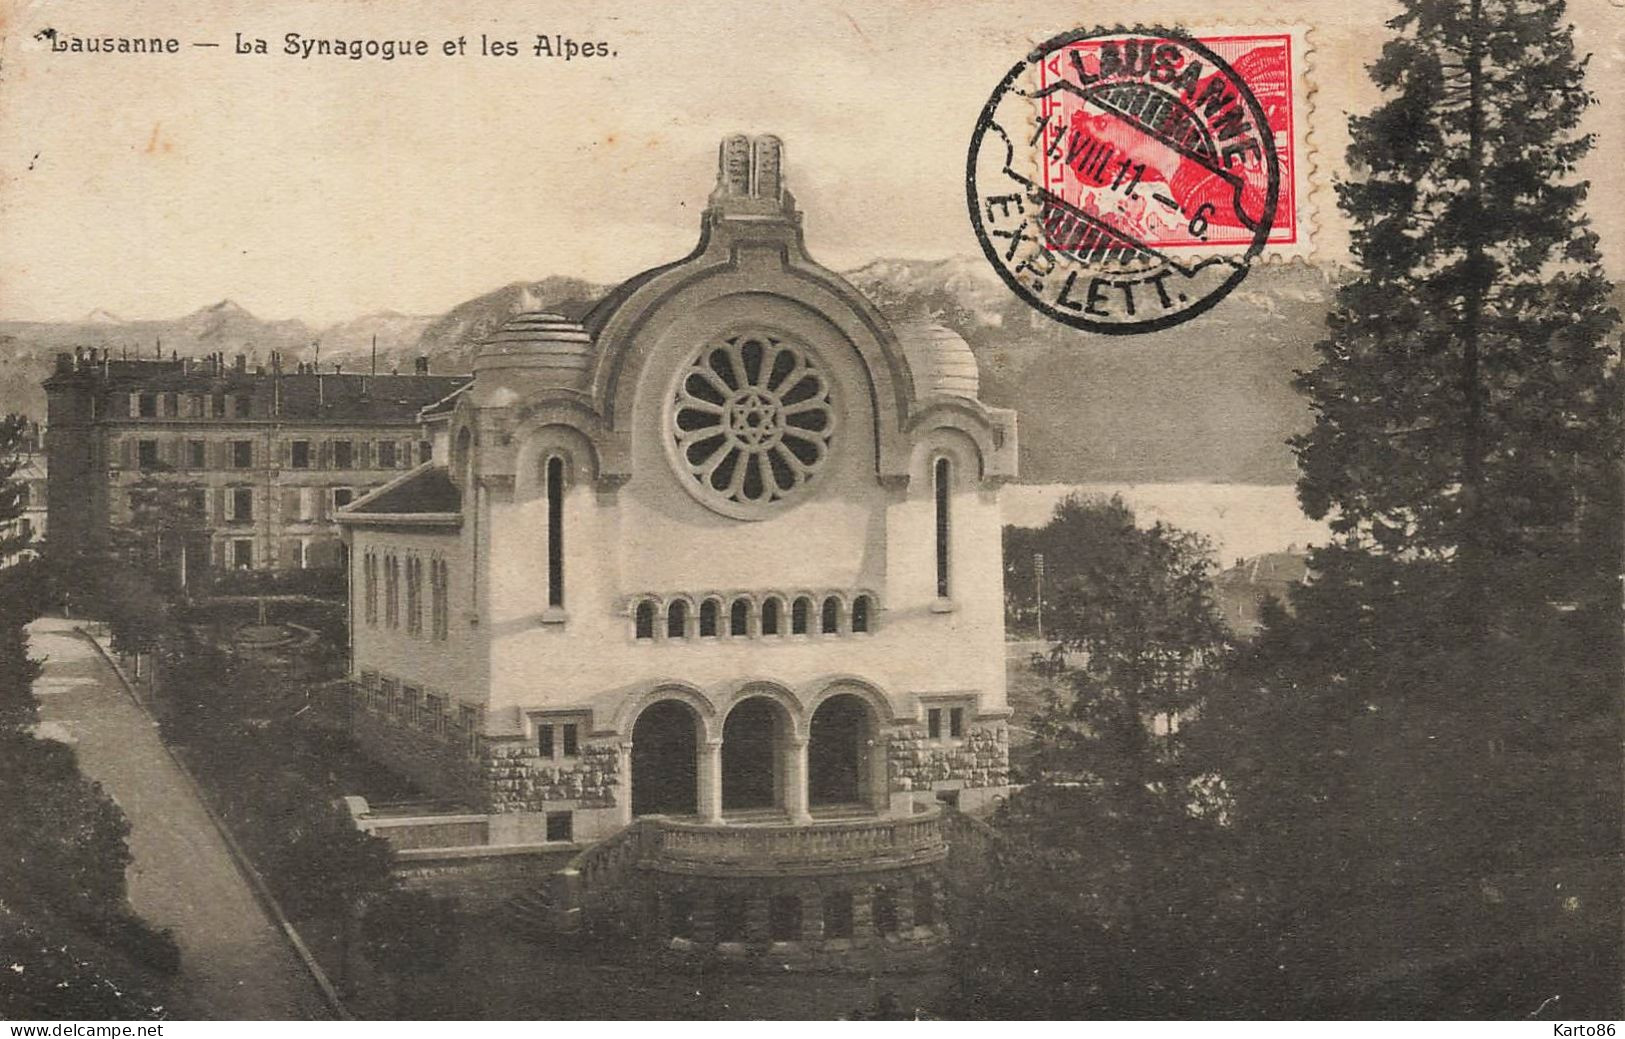 Lausanne , Vaud * La Synagogue Les Alpes * Judaica Synagoge Temple Israélite Juif Judaisme Jew Jewish Suisse Schweiz - Judaisme